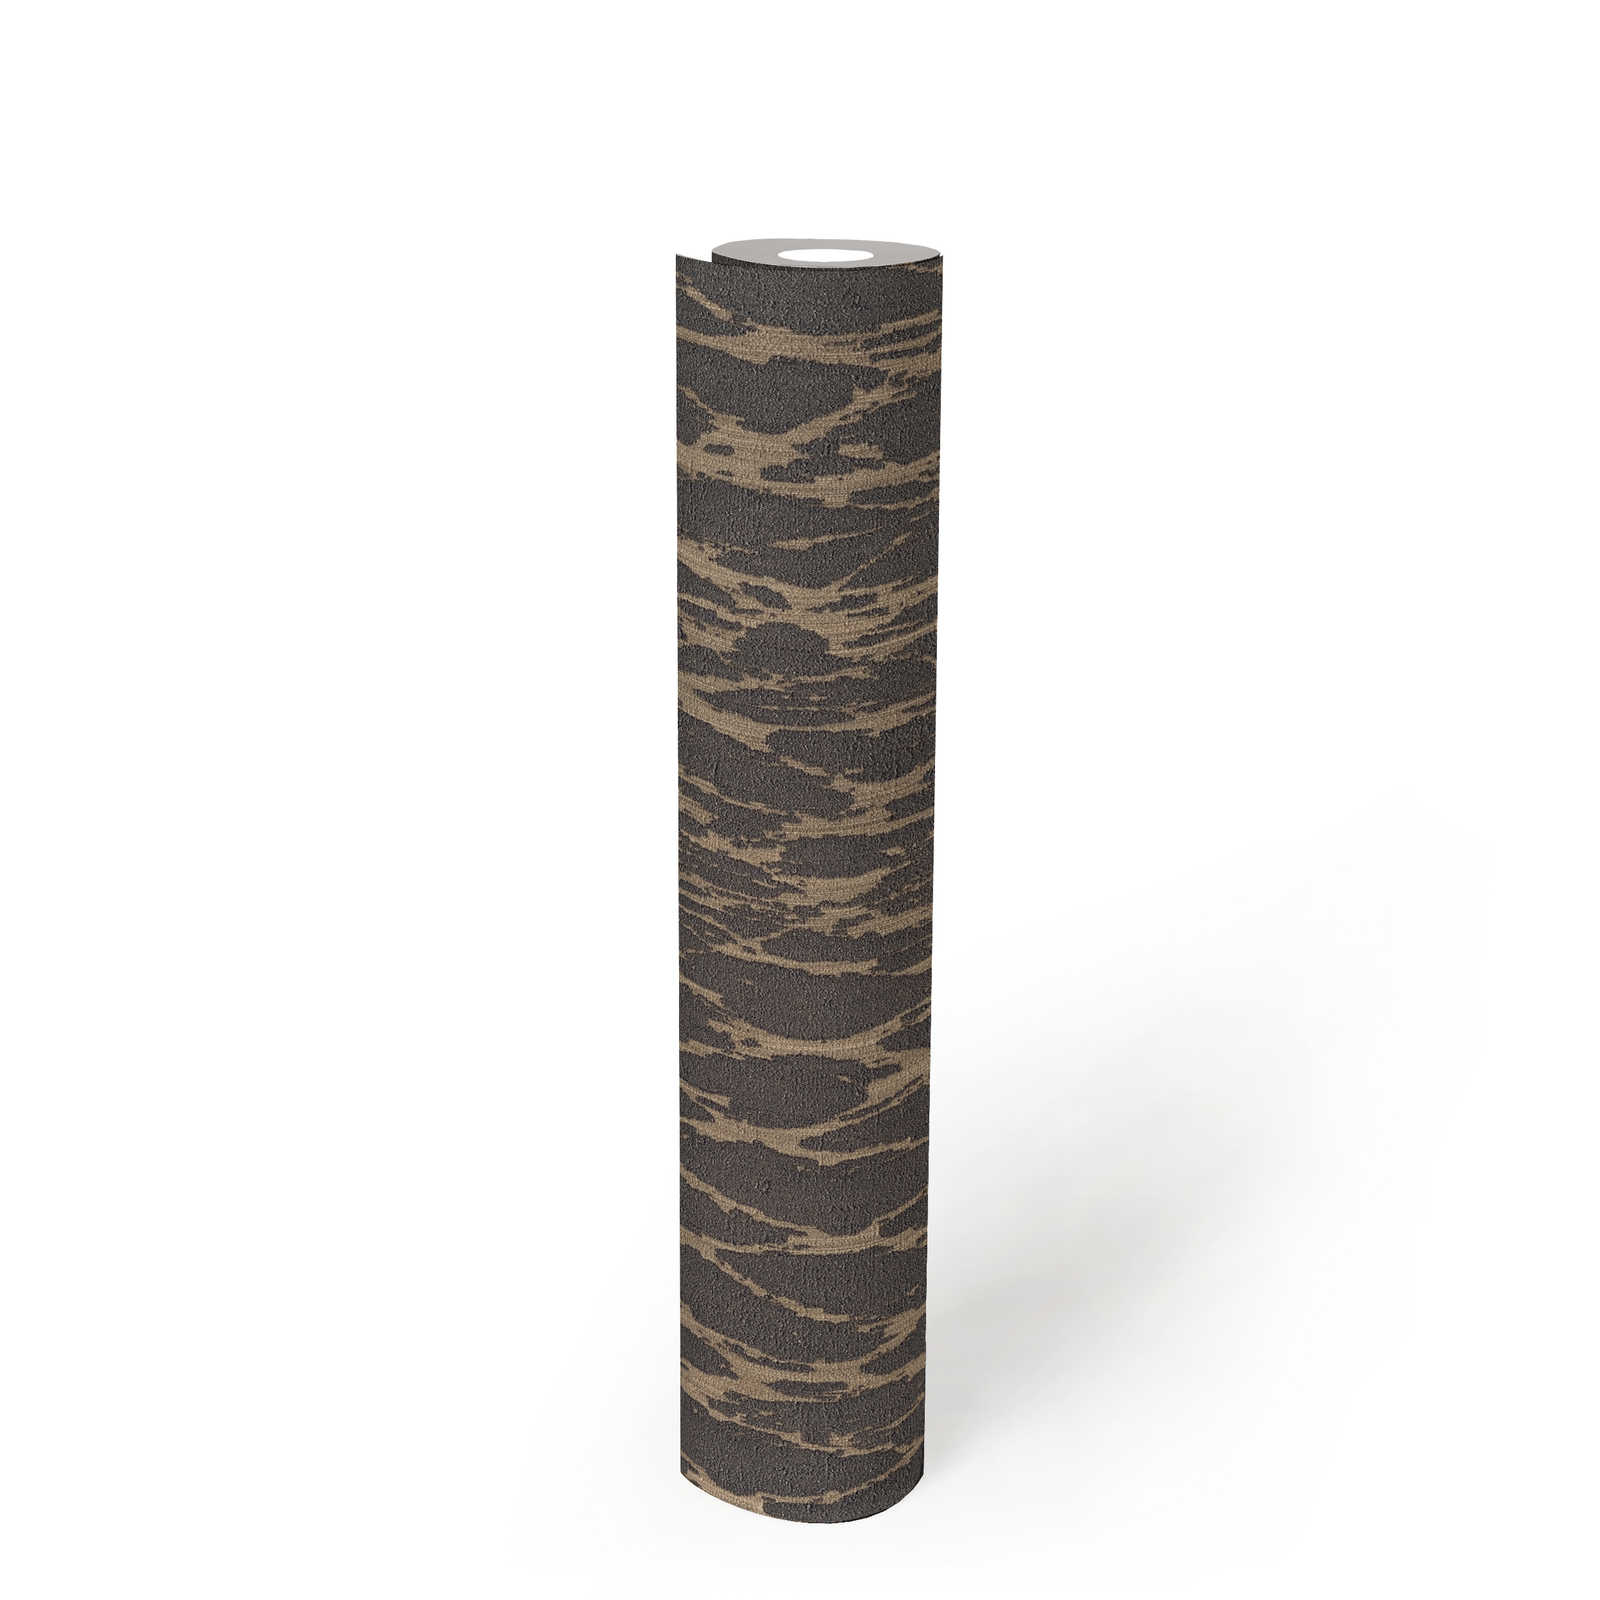             Papel pintado no tejido con motivo de líneas onduladas - negro, marrón, beige
        